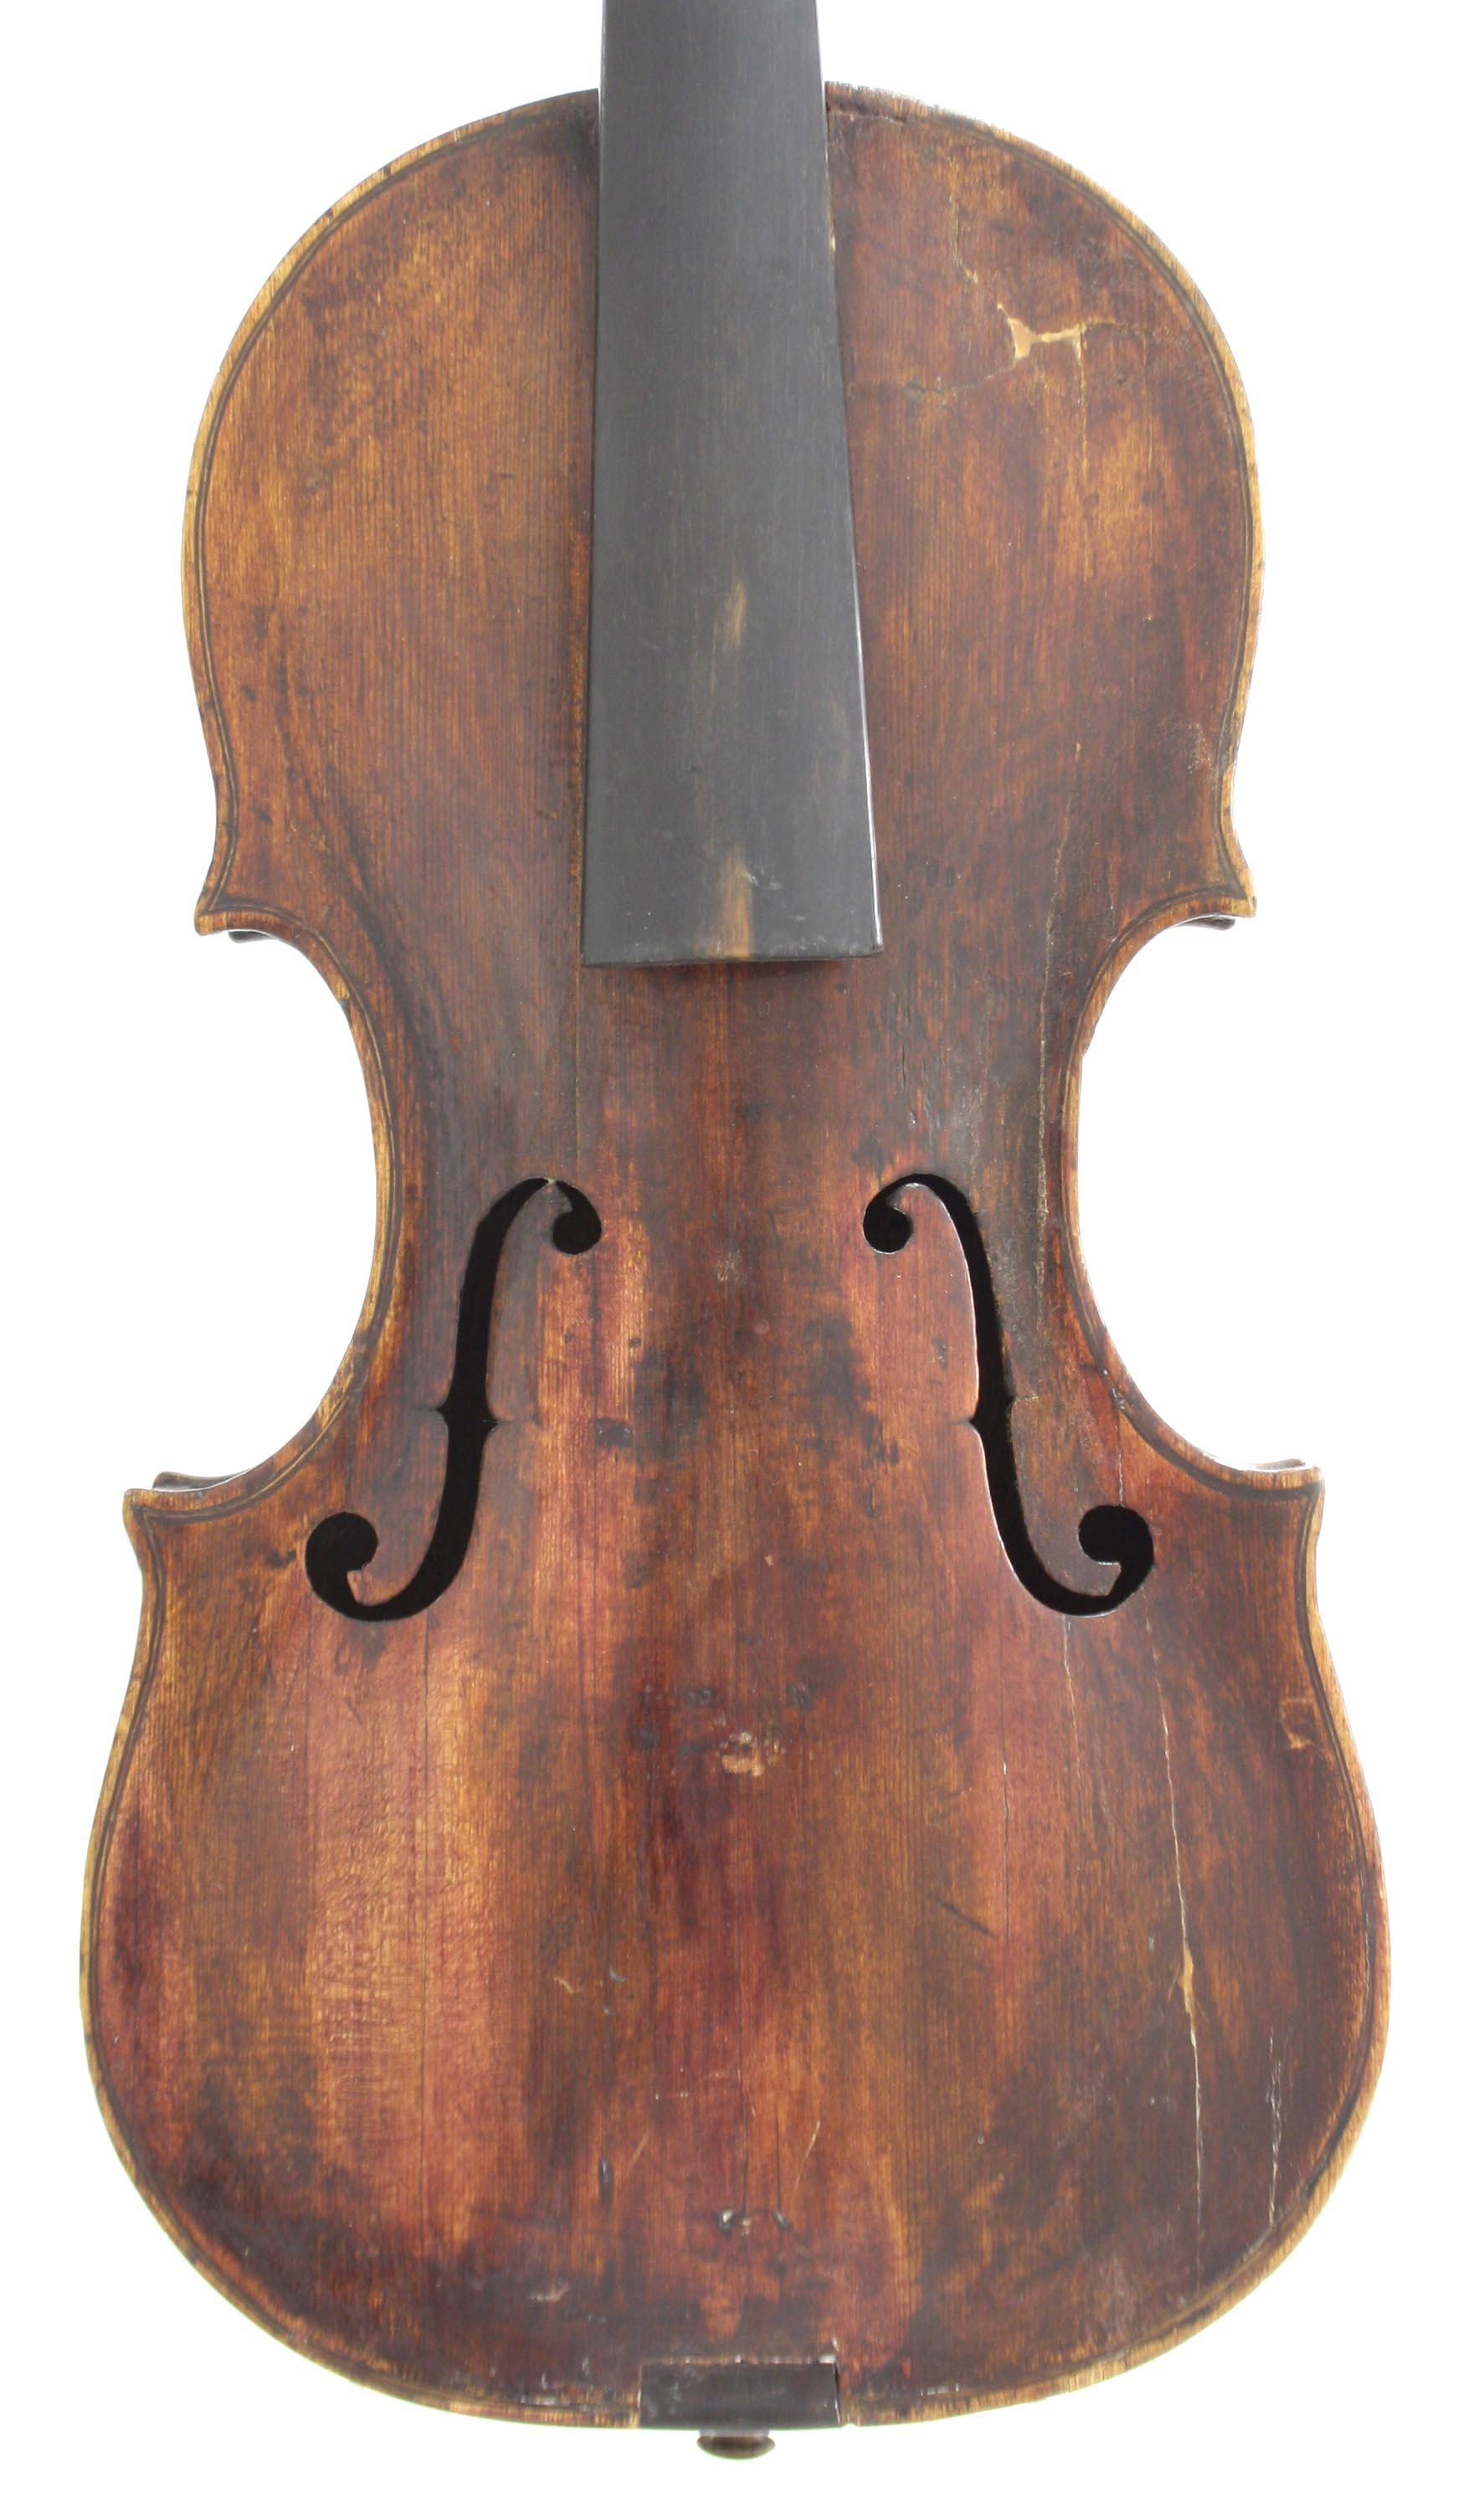 Interesting 18th century violin, 13 15/16", 35.40cm